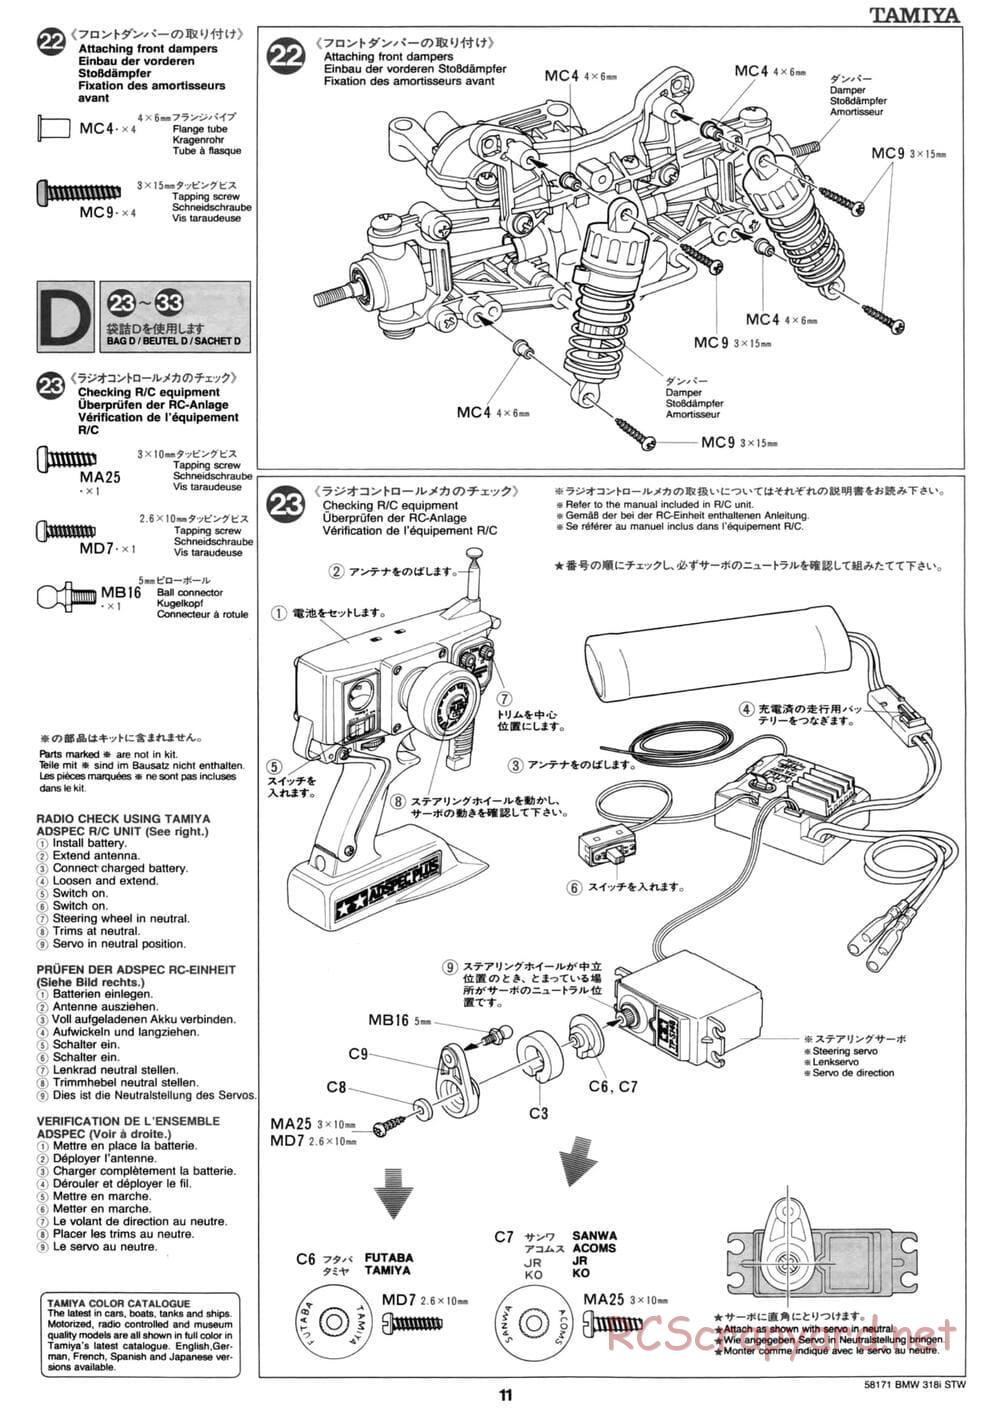 Tamiya - BMW 318i STW - TA-02 Chassis - Manual - Page 11